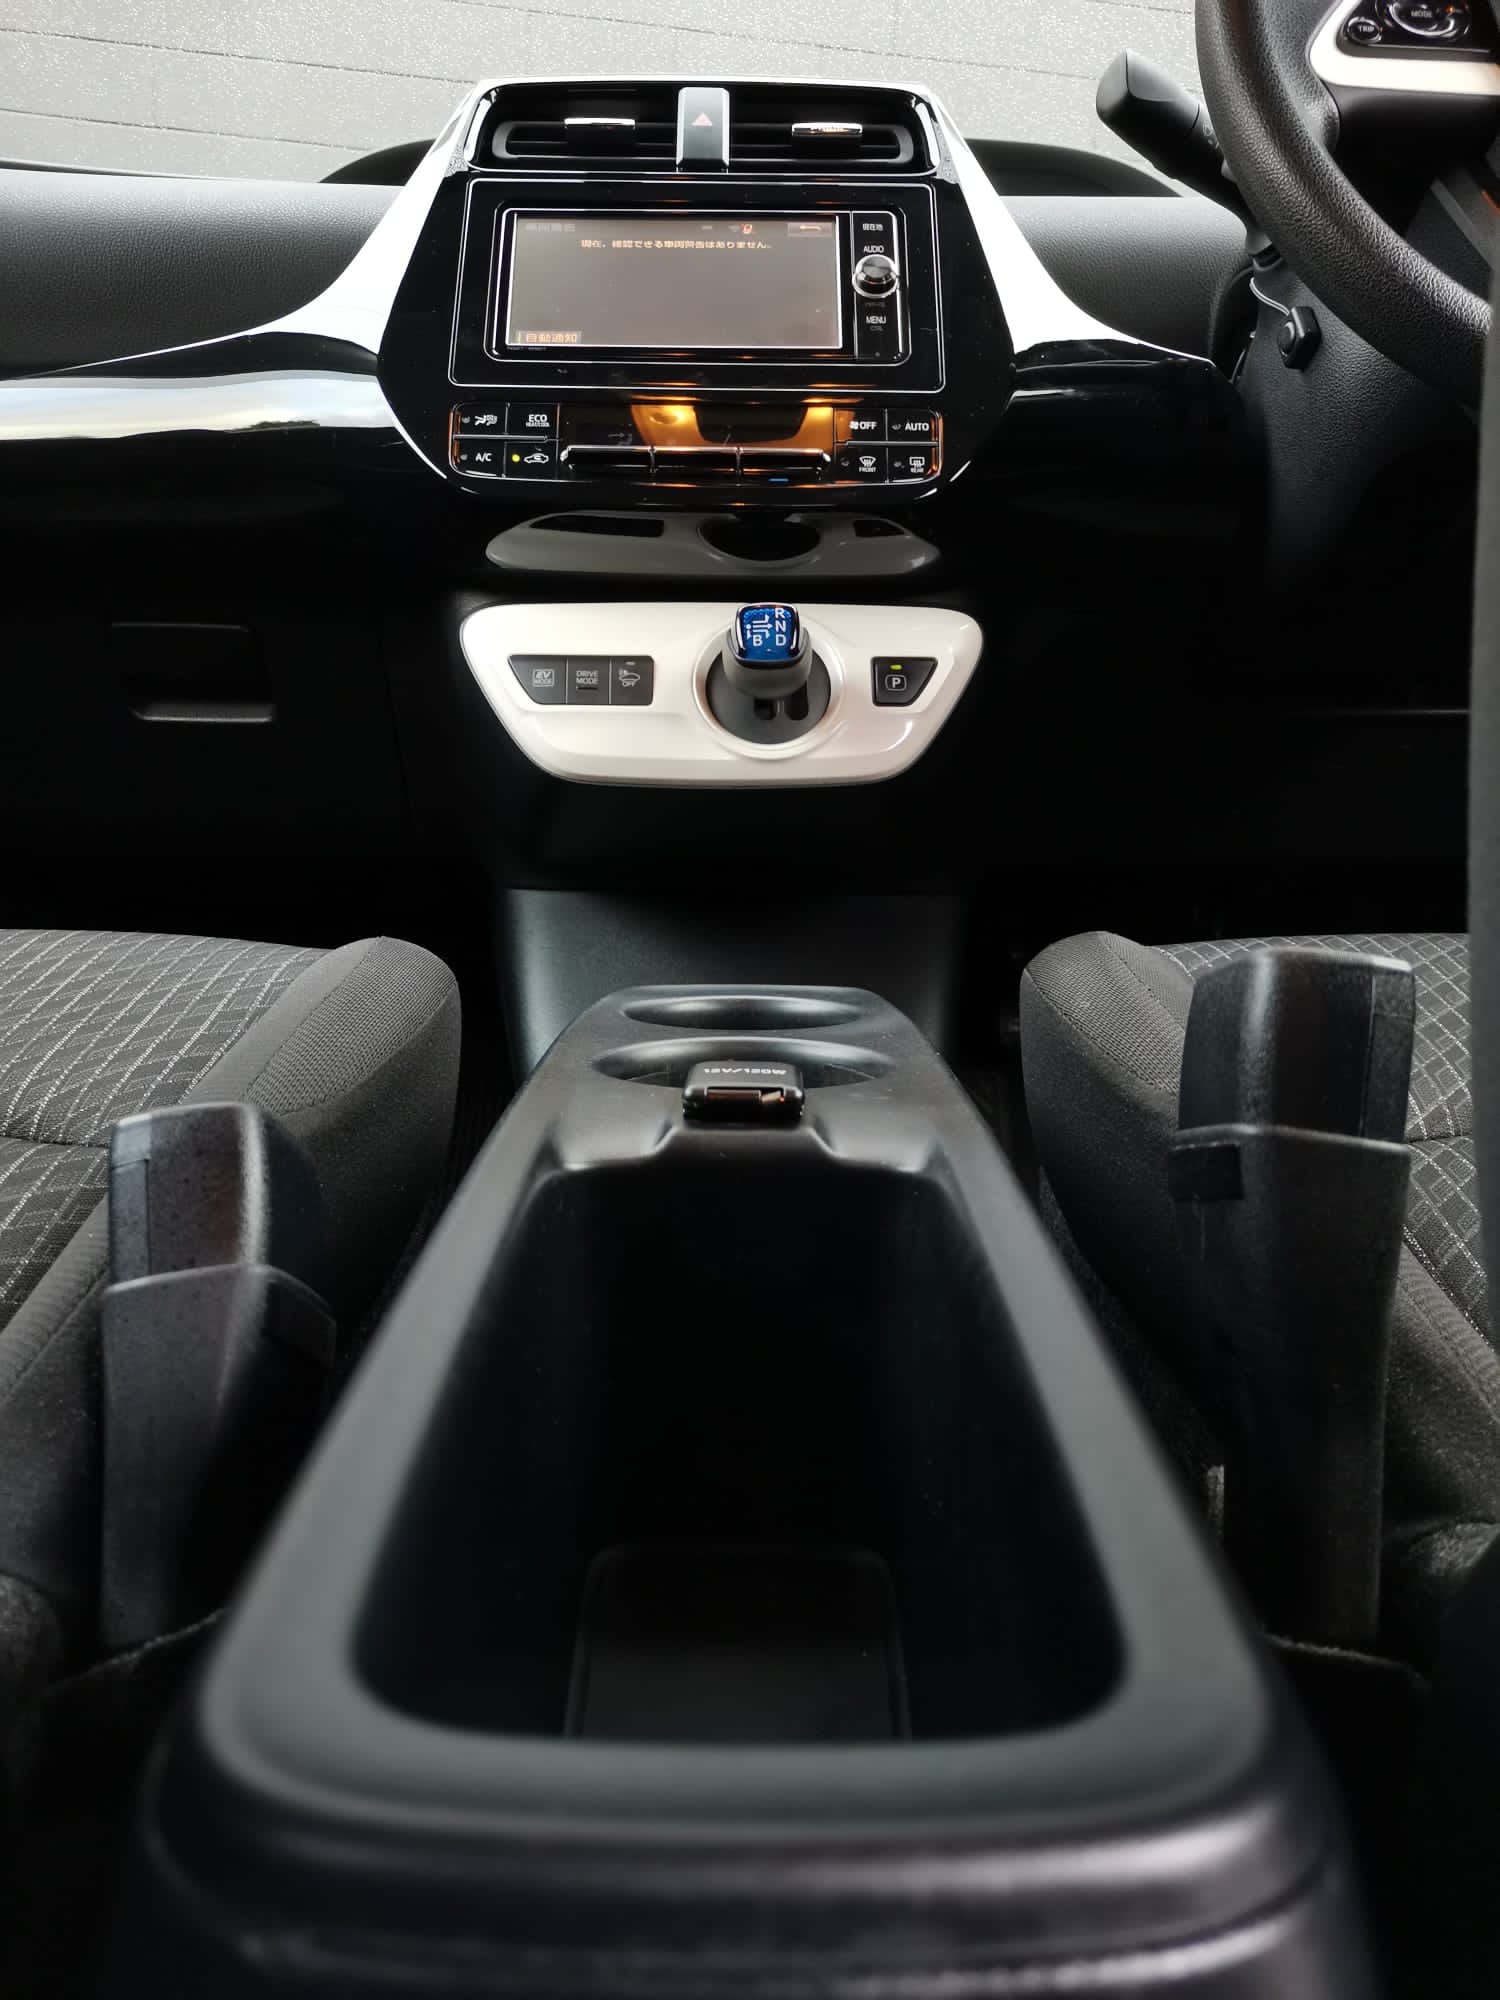 Toyota Prius 2017 Image 19